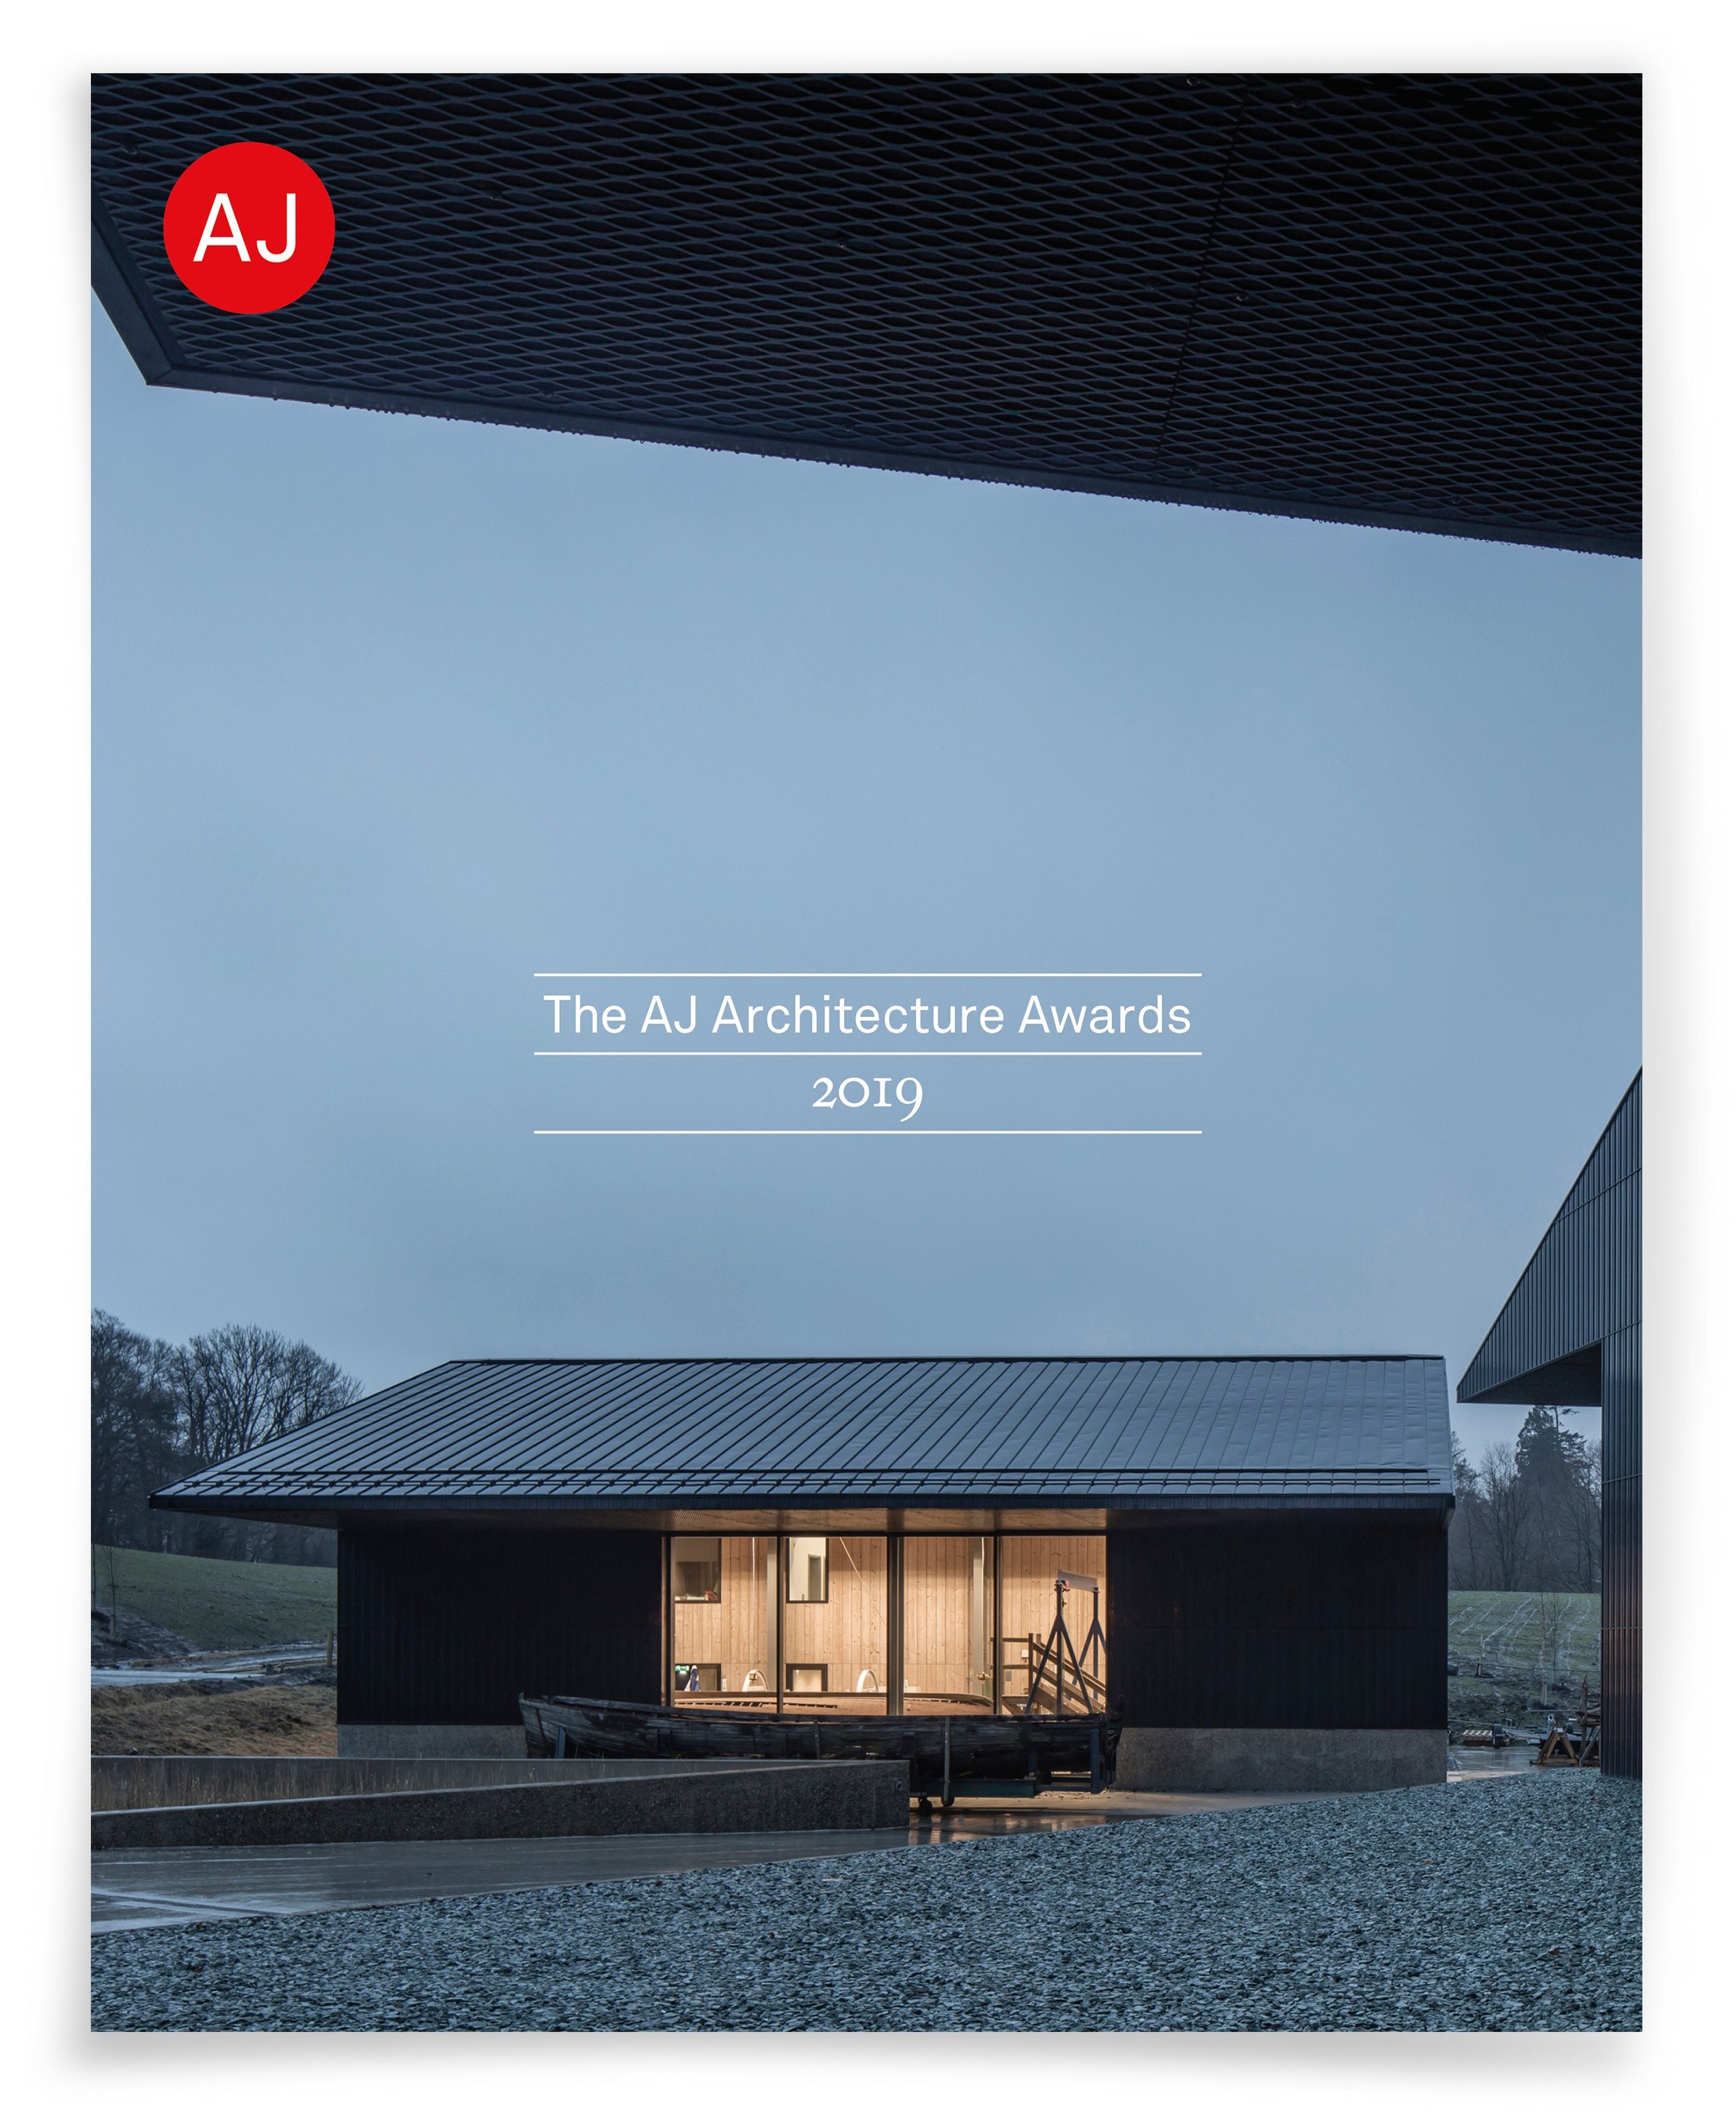 AJ 21.11.19: AJ Architecture Awards